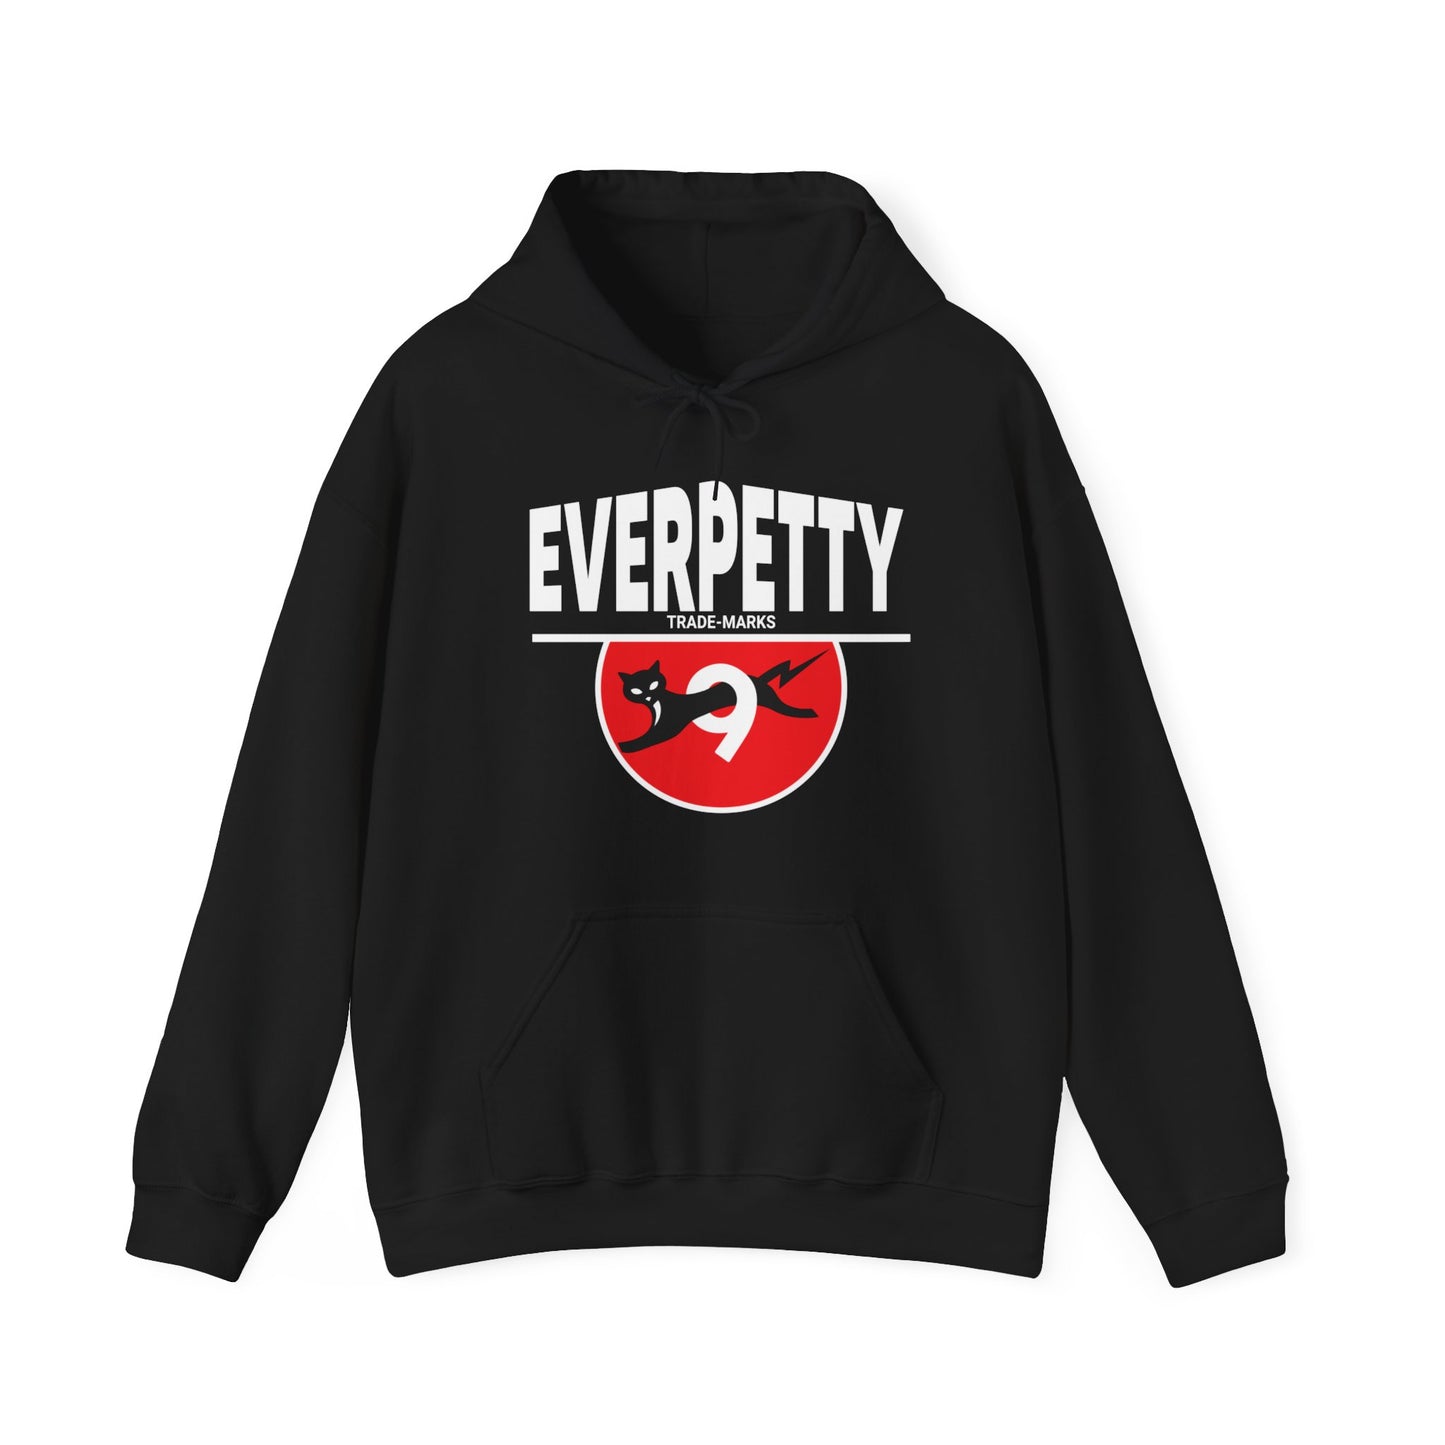 EVERPETTY (Eveready Battery) -Hooded Sweatshirt